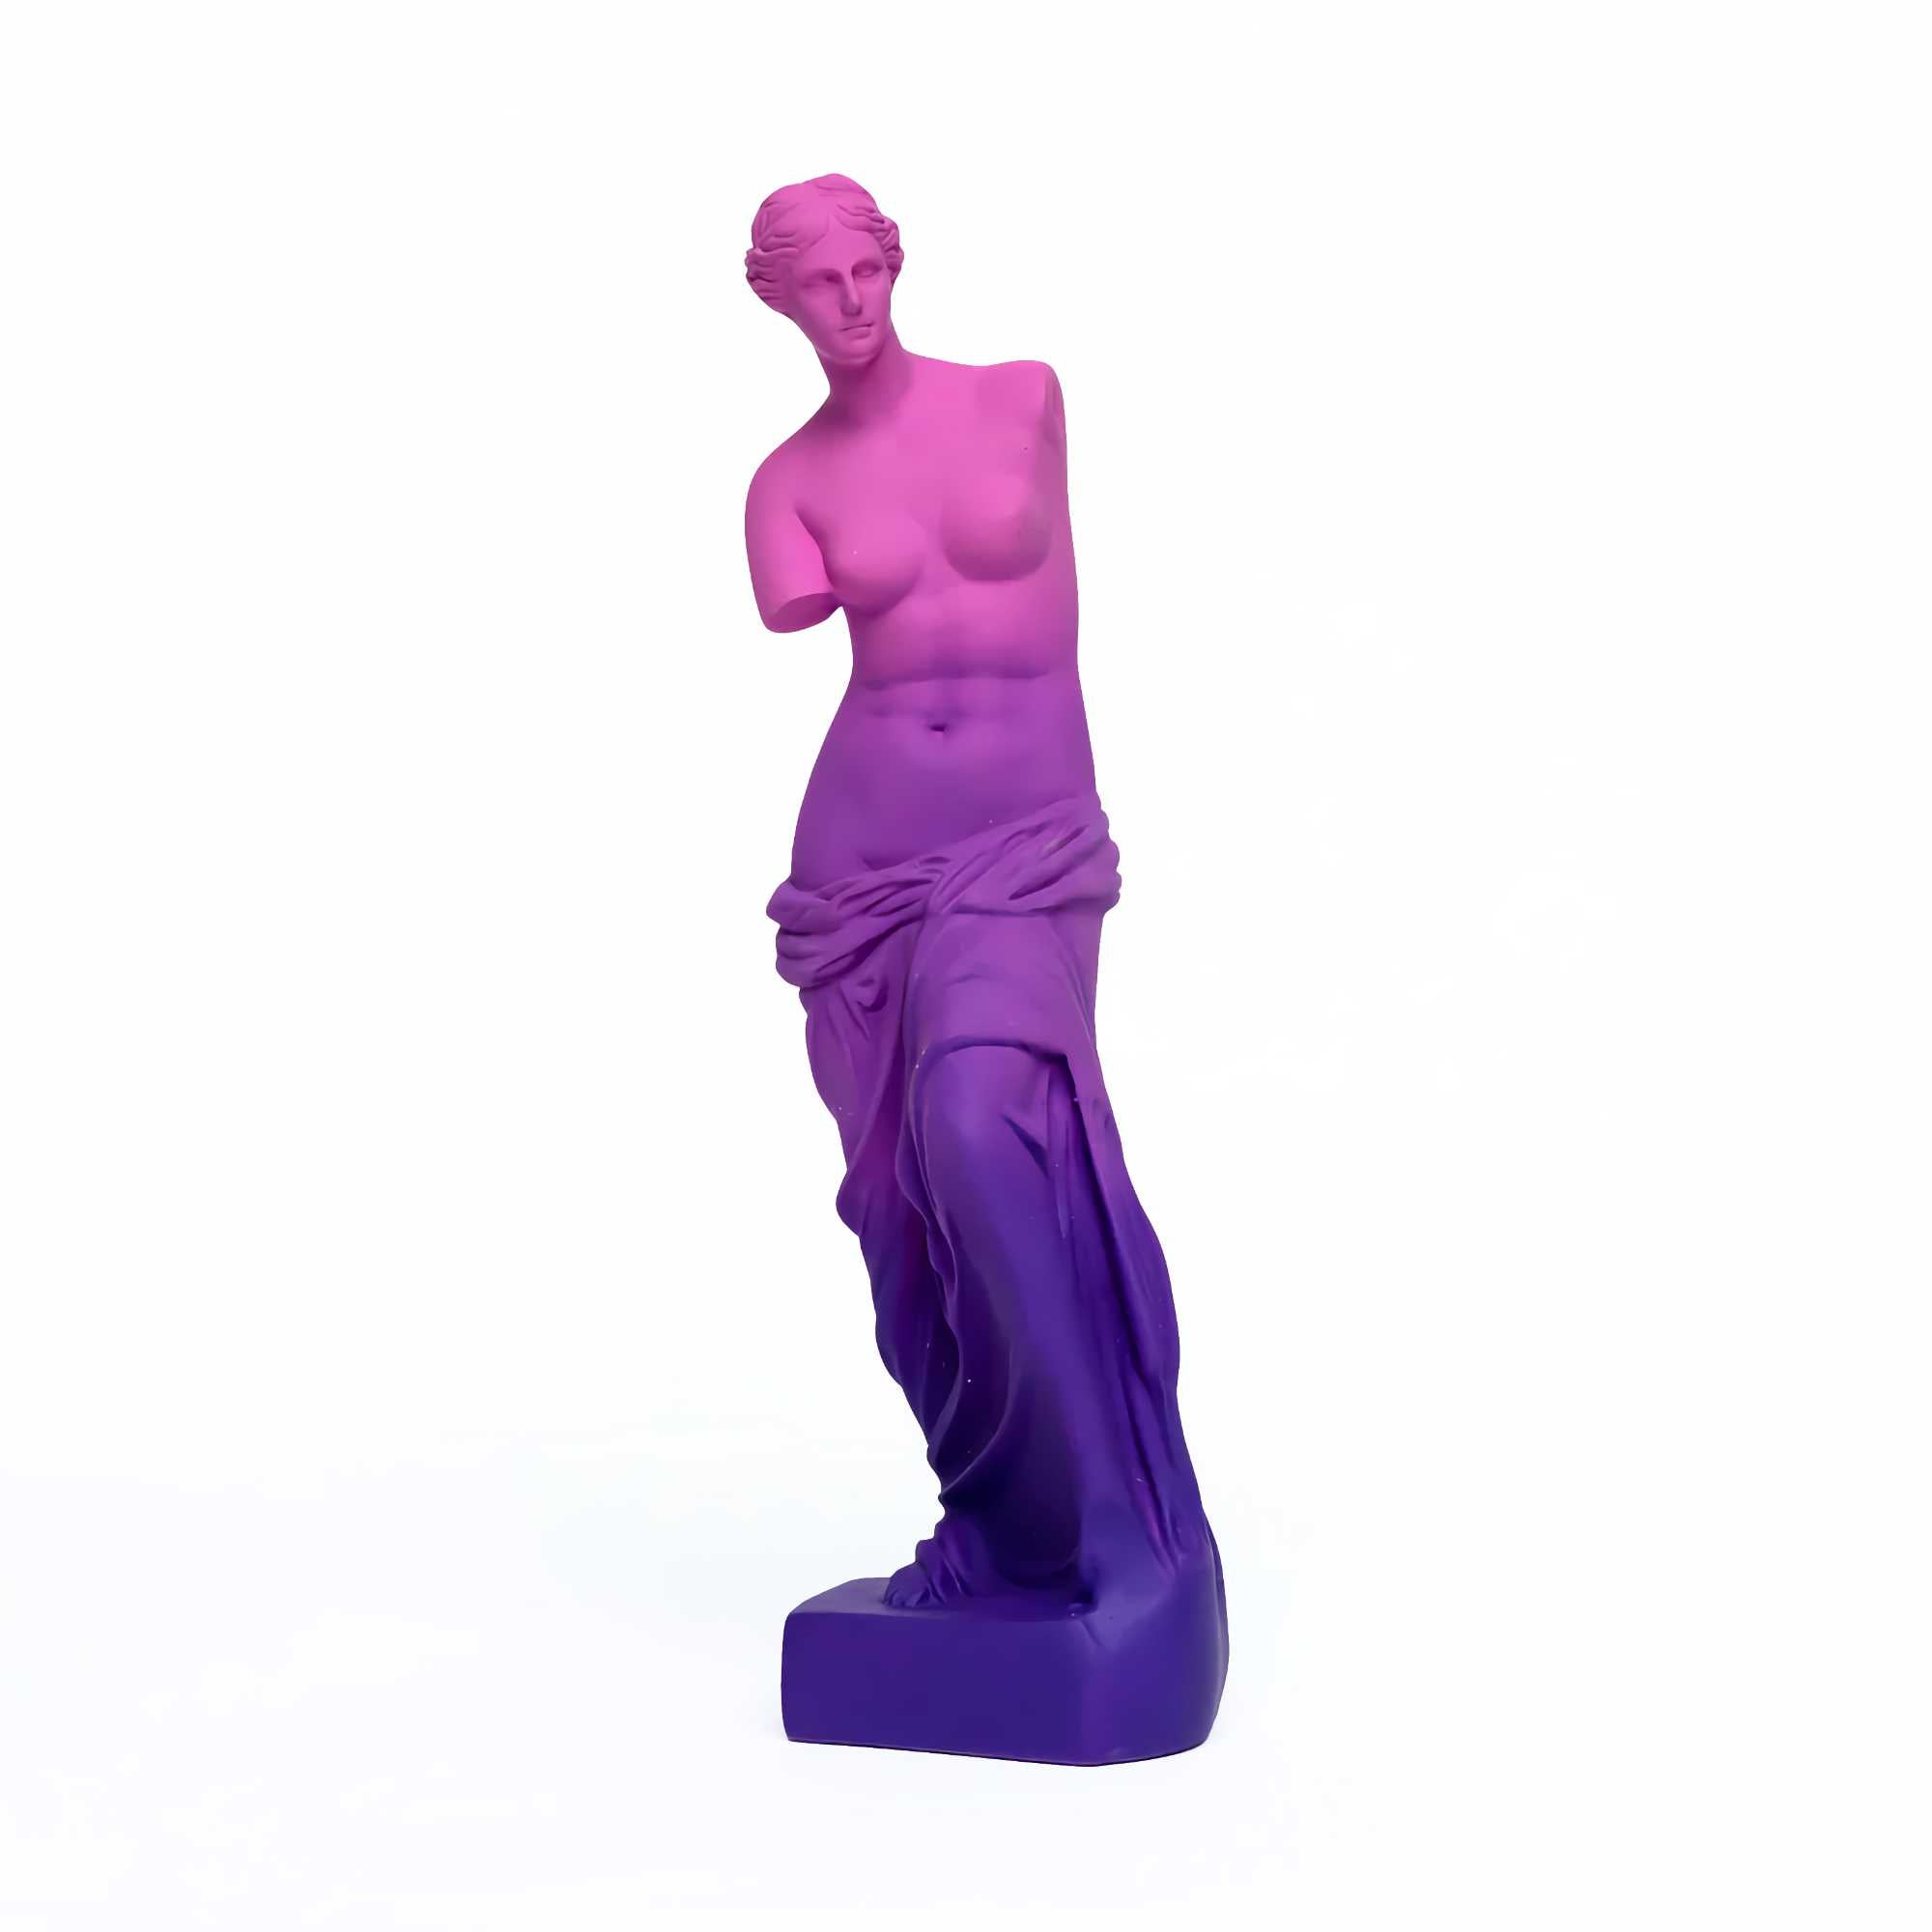 Today is Art Day Statue, Venus de Milo